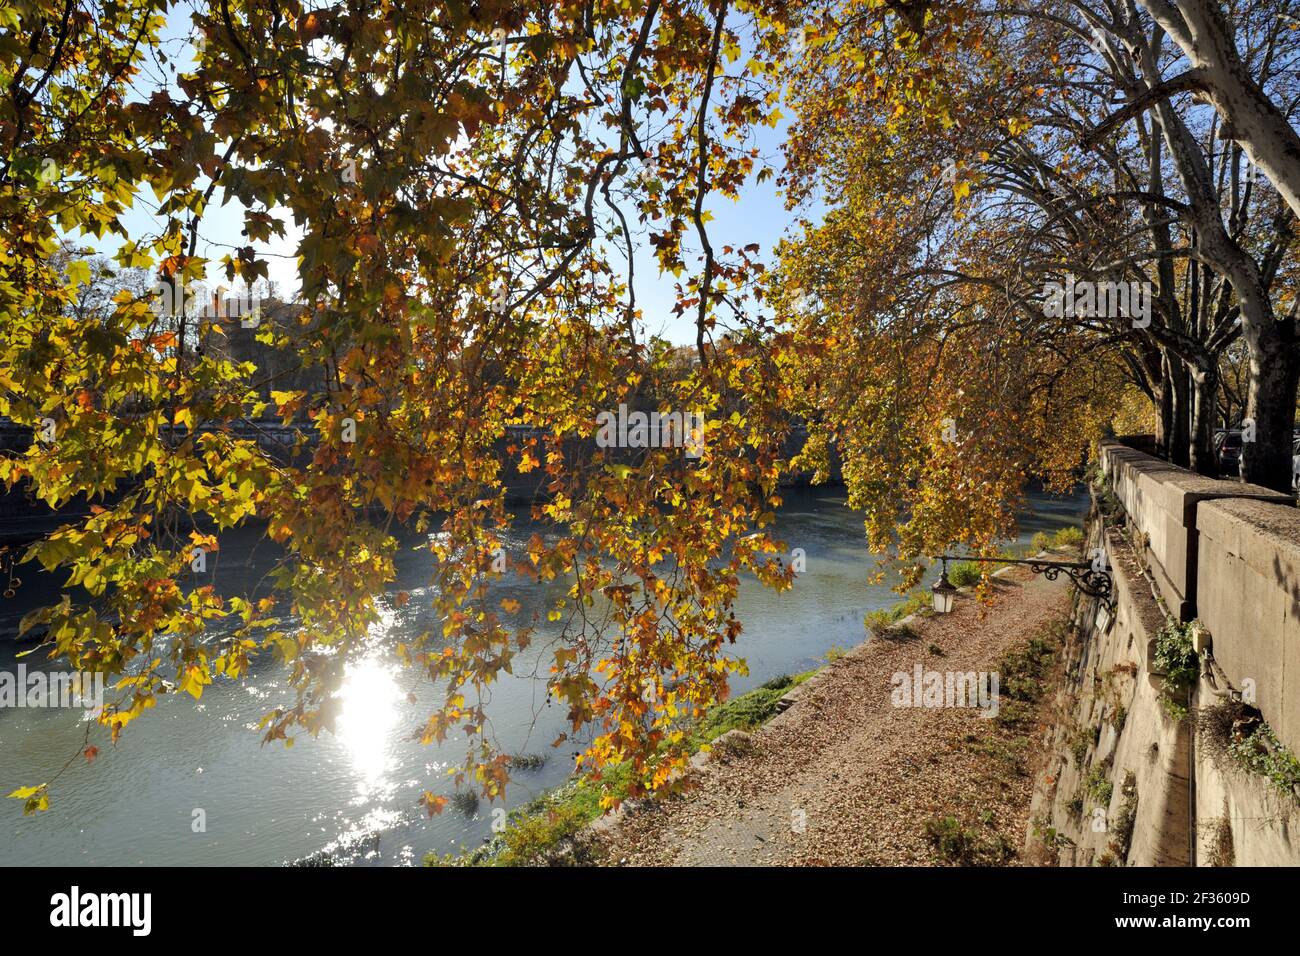 italy, rome, tiber river, autumn trees Stock Photo